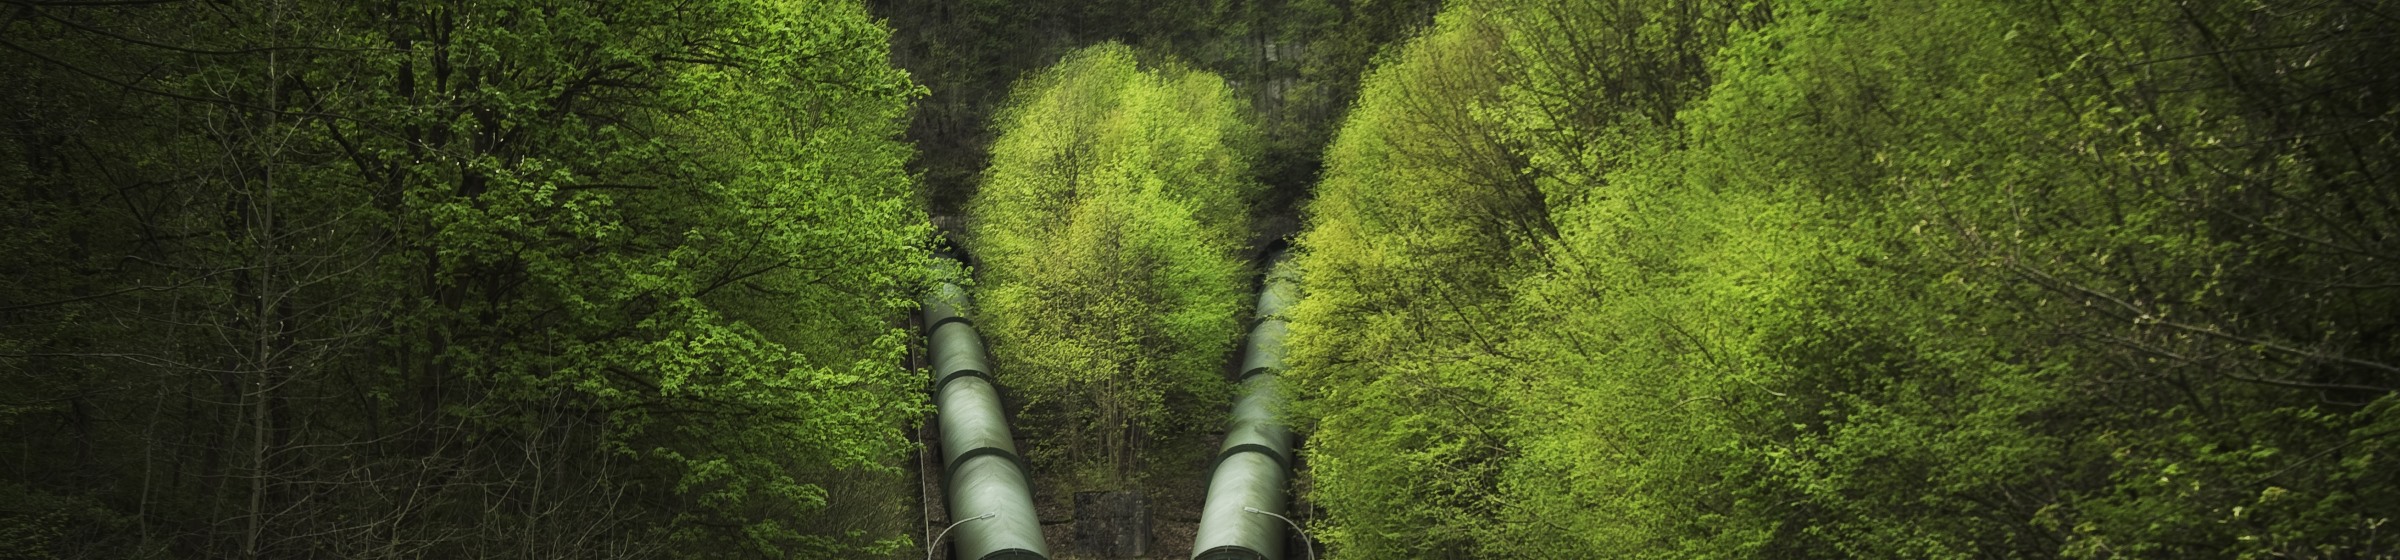 Pressure pipelines at pumped storage power plant in Erzhausen, in Germany.